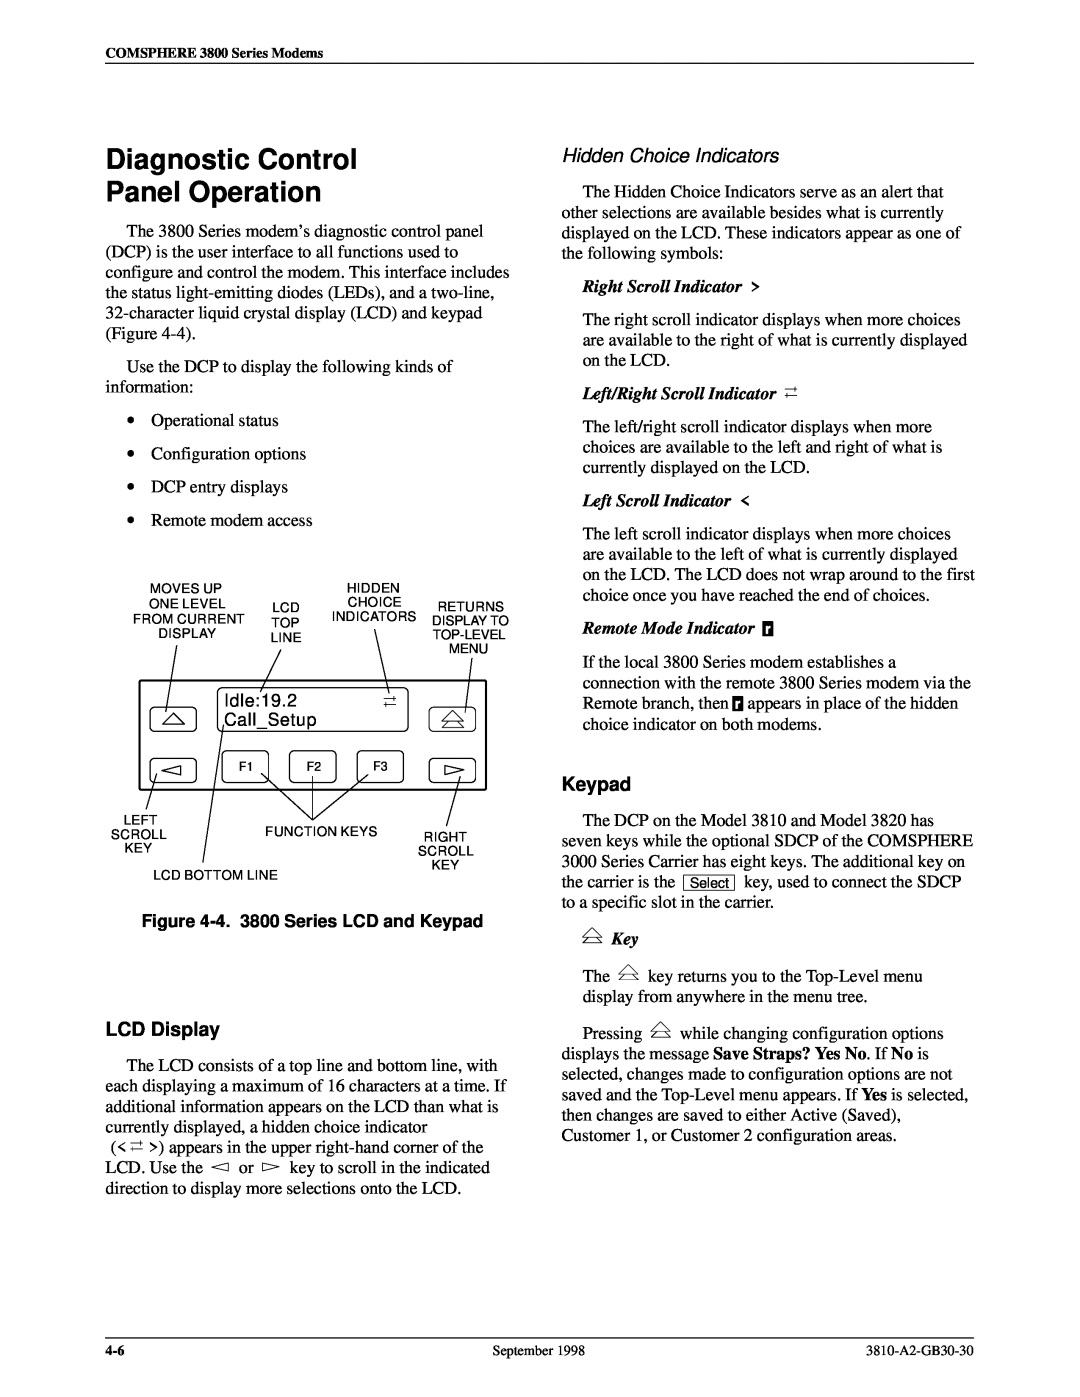 Paradyne 3800 Diagnostic Control Panel Operation, LCD Display, Hidden Choice Indicators, Keypad, Right Scroll Indicator 